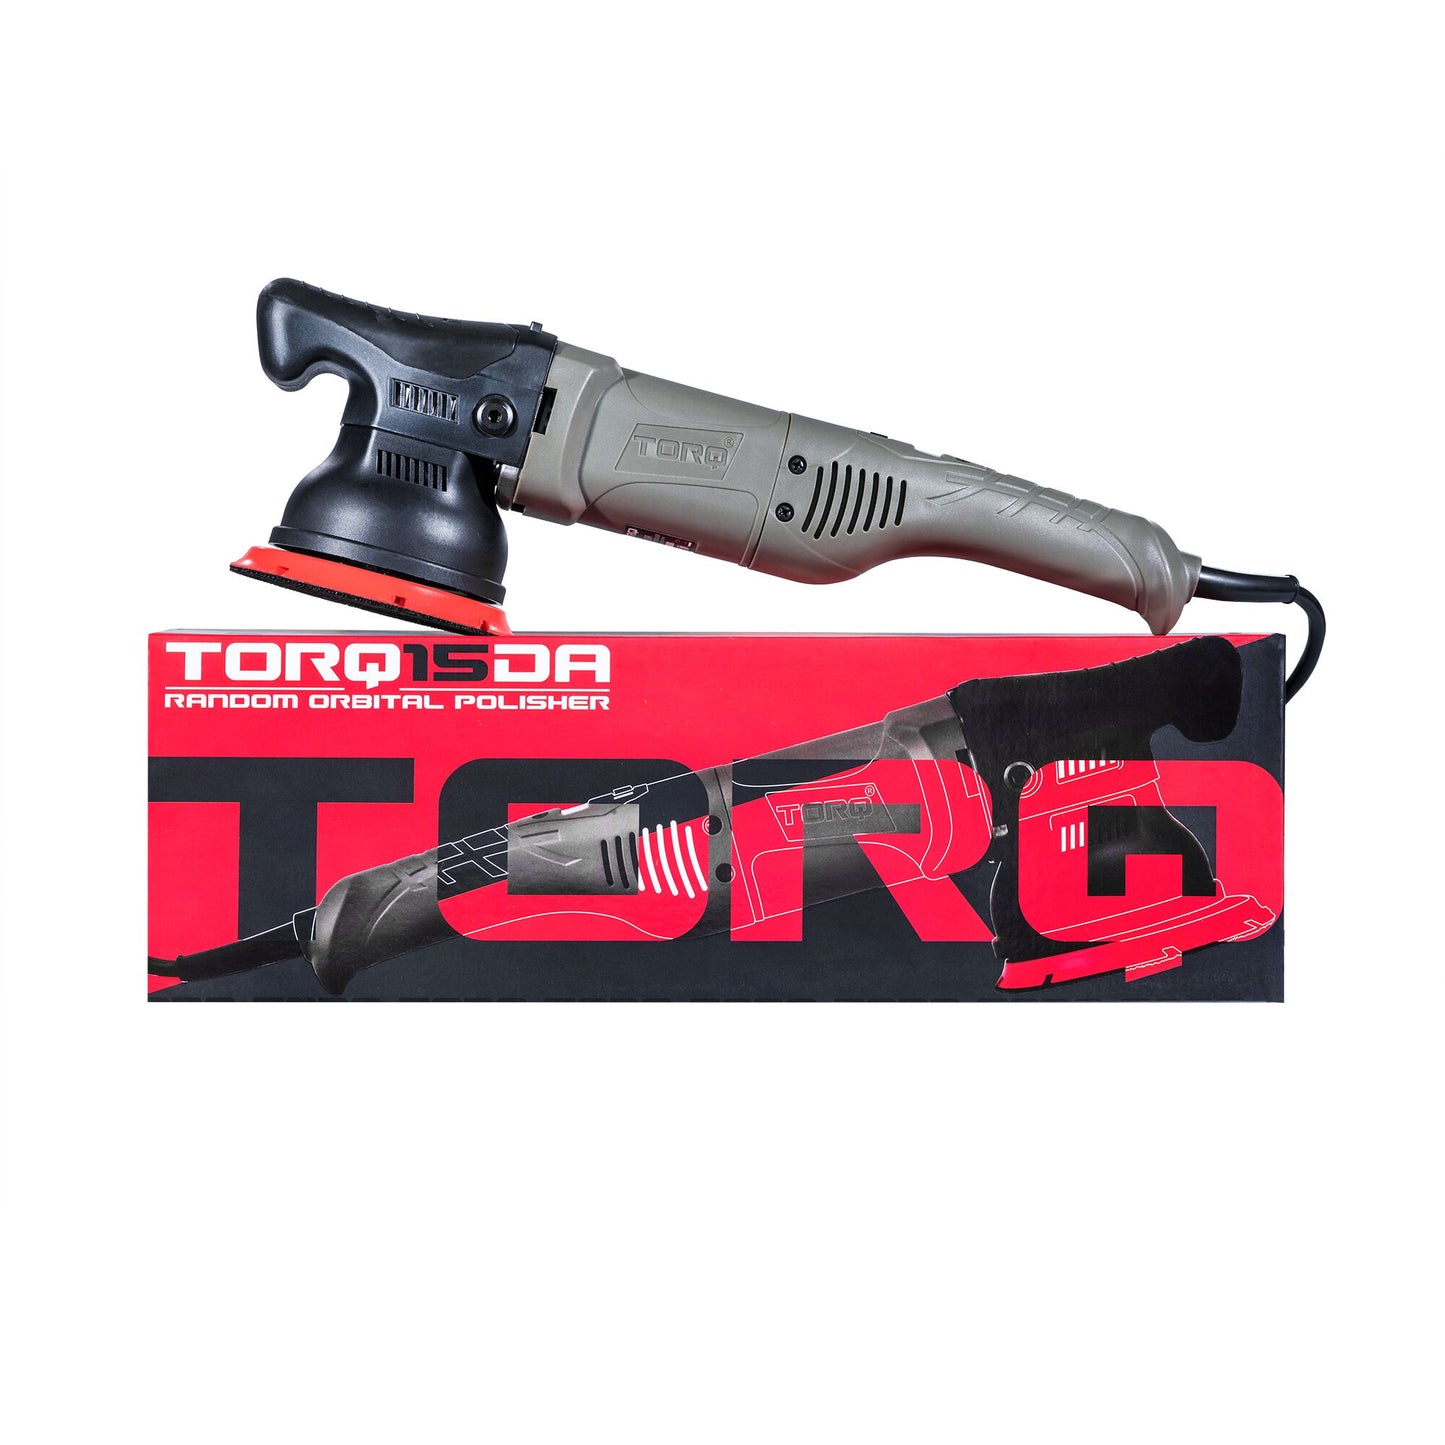 TORQ 15DA 15mm Long-Throw Random Orbital Polisher